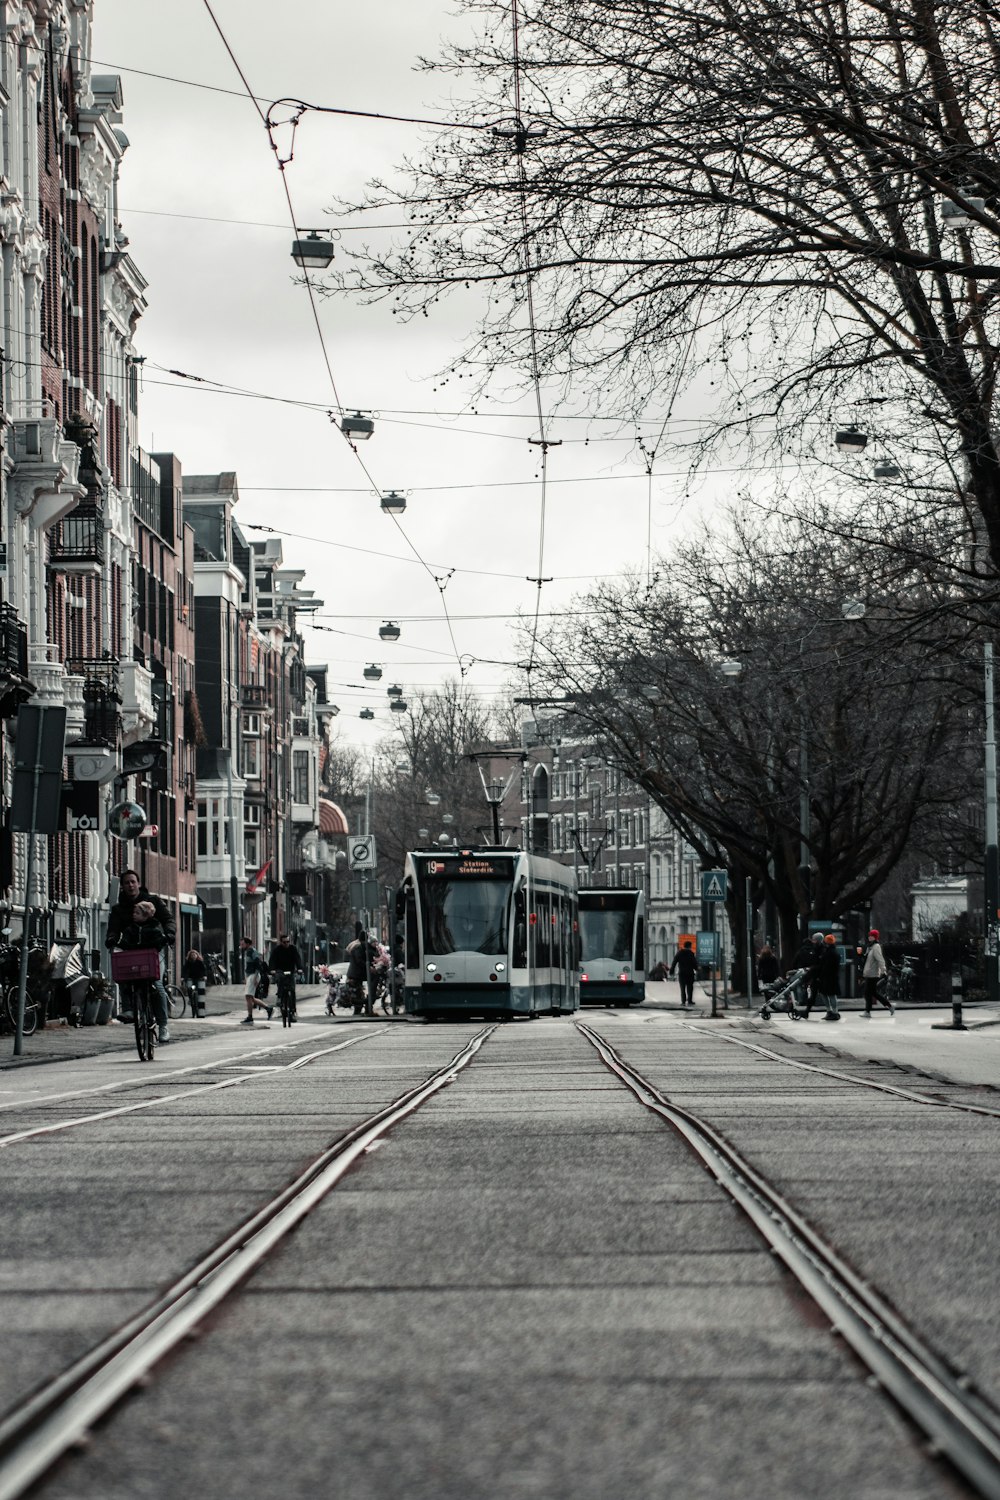 green tram on road between buildings during daytime